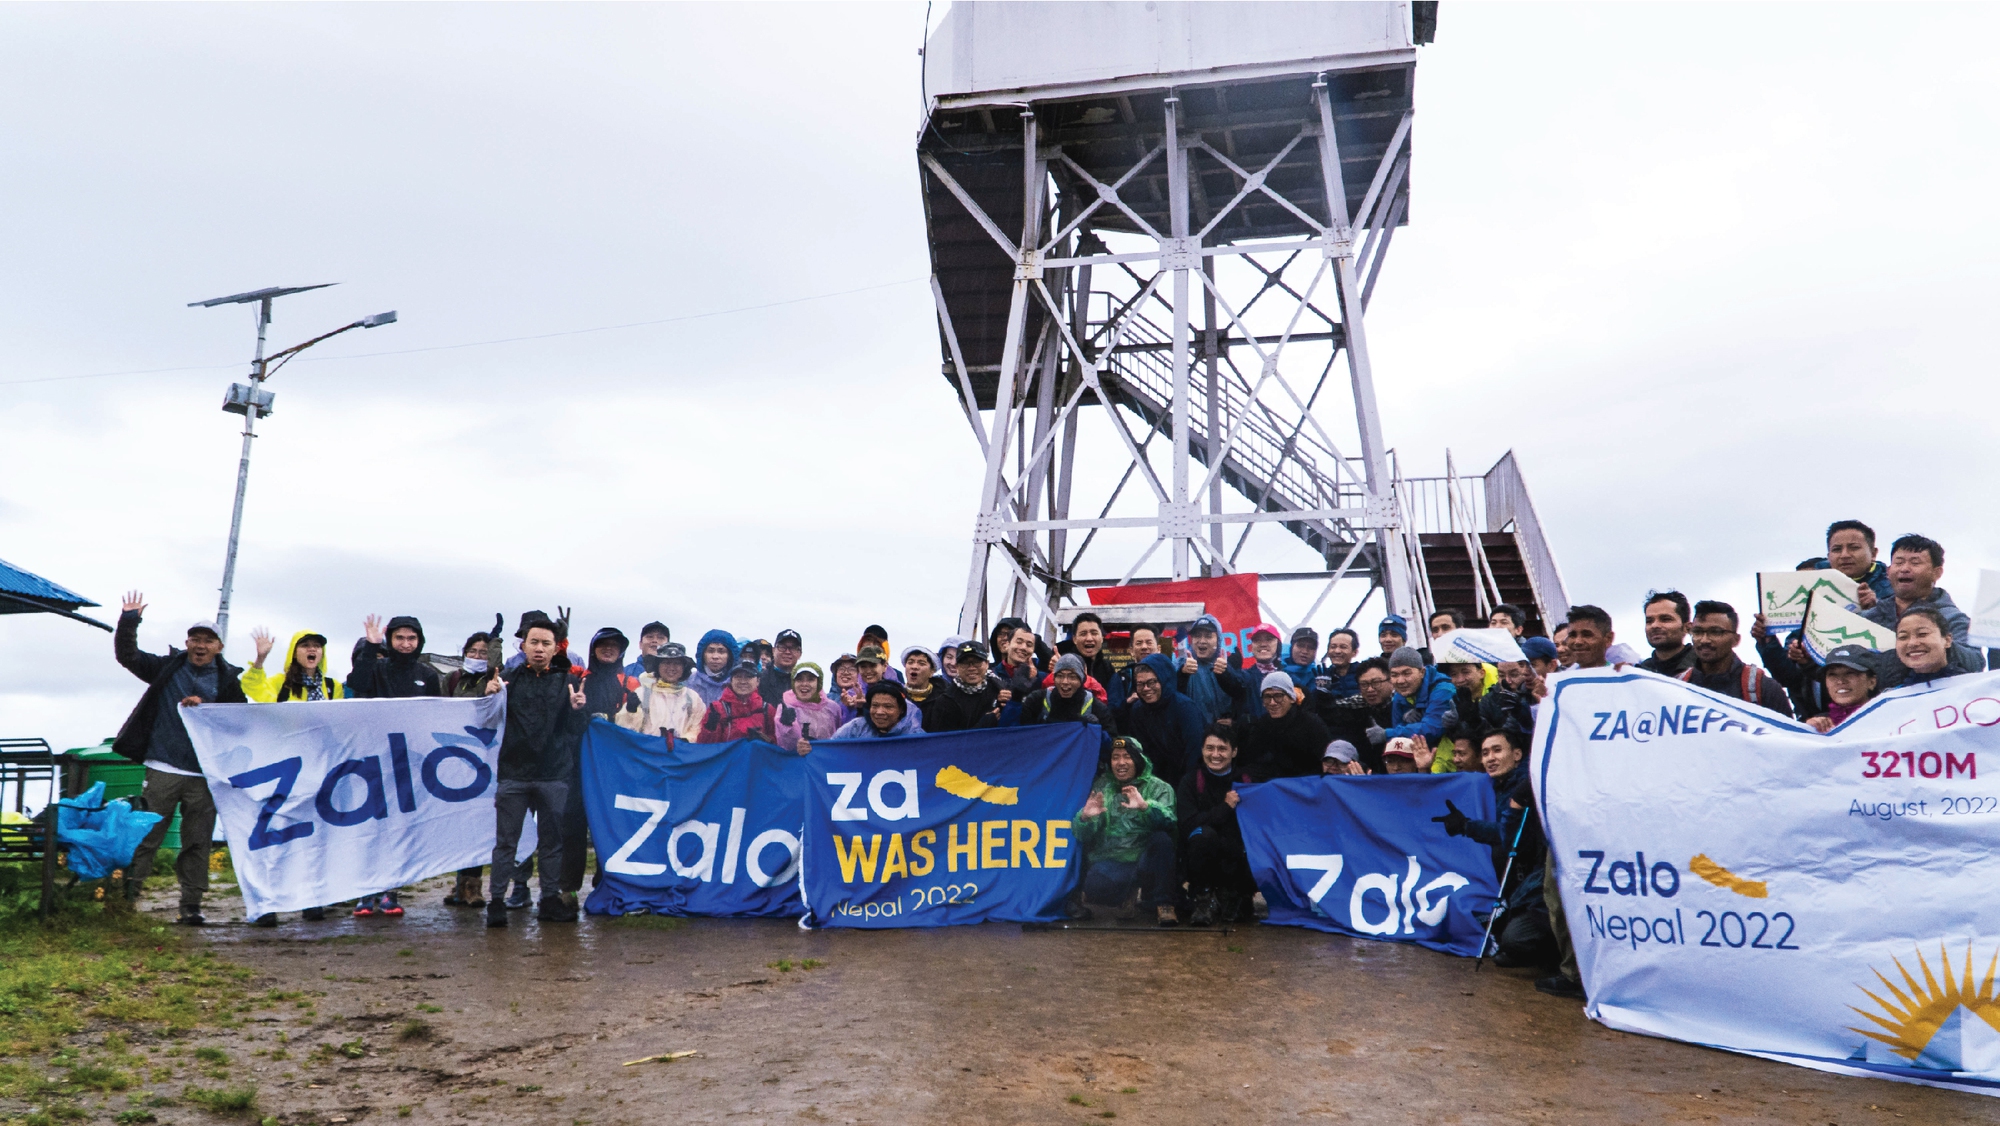 Zalo group leo núi mừng sinh nhật tại Nepal - Ảnh 1.